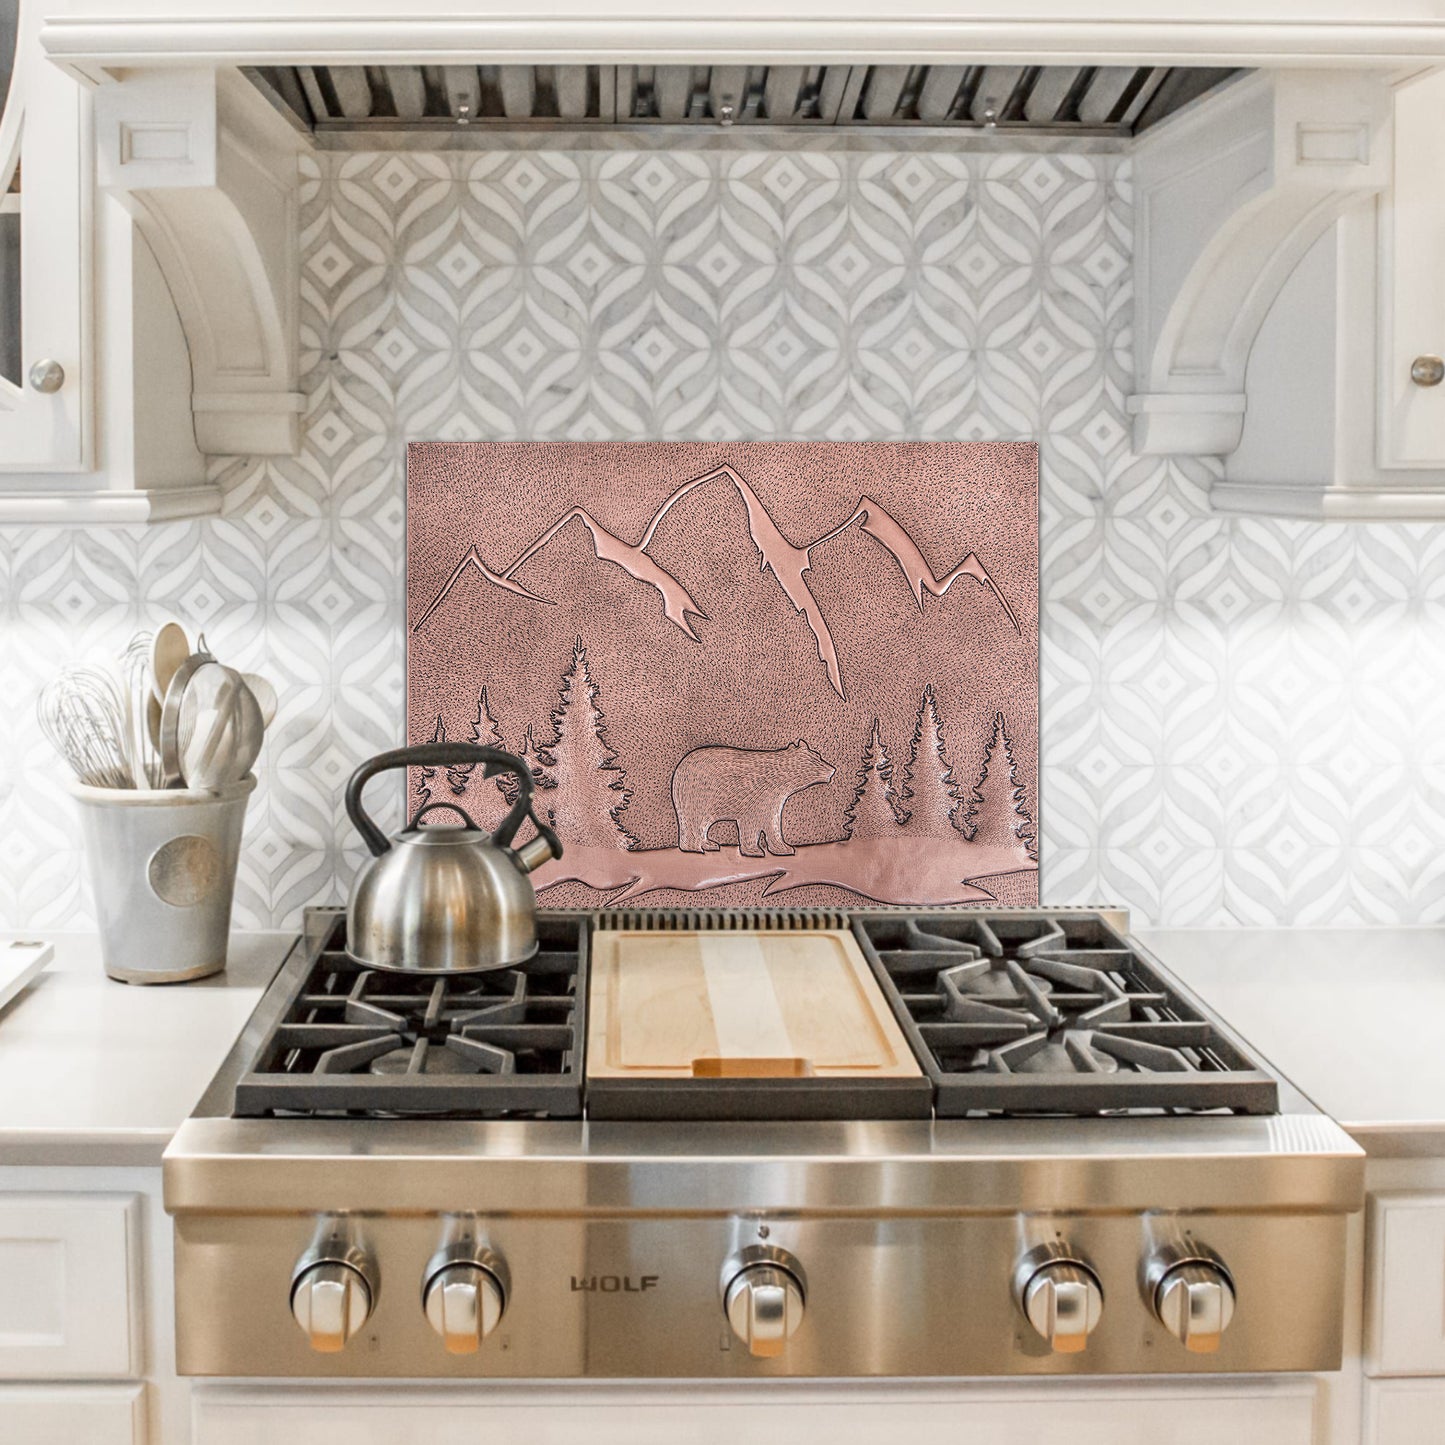 Bear Scene Kitchen Backsplash Tile - 18"x24" Copper